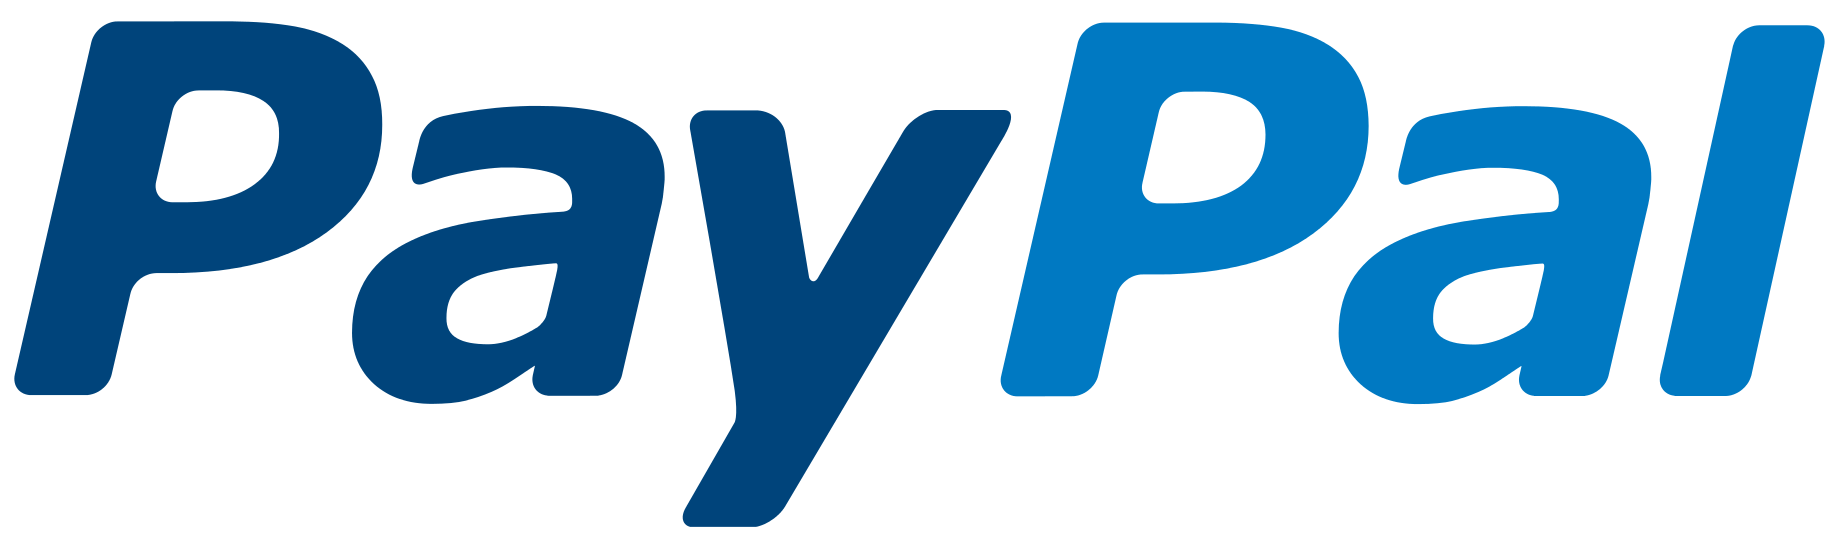 PayPal App Logo - Paypal App Logo Png Images